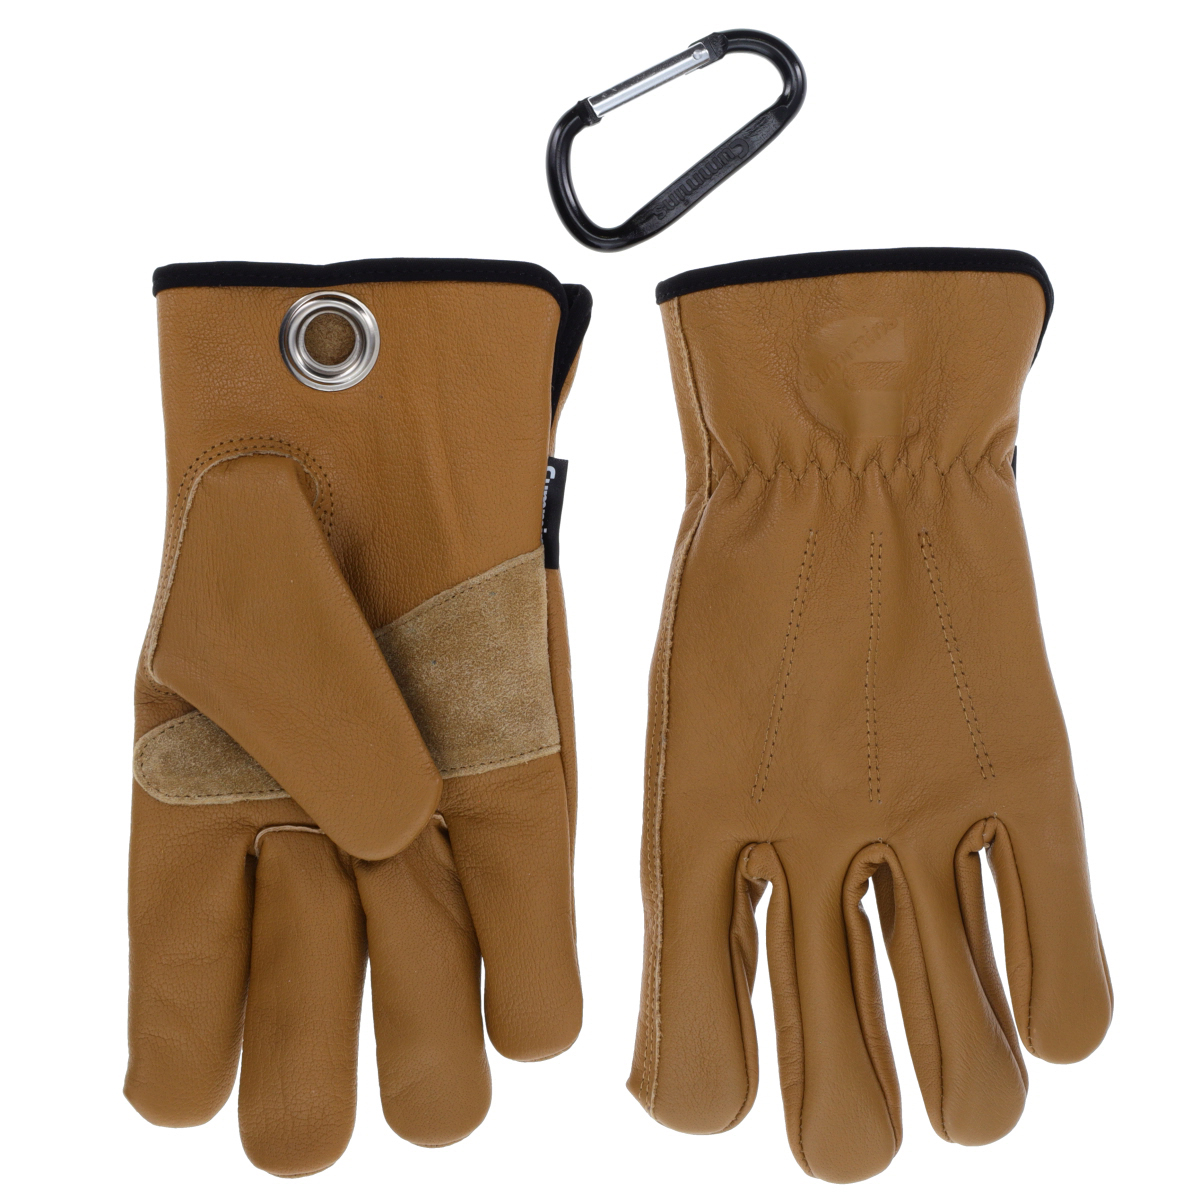 Cummins Full Leather Gloves for Men CMN35151 - Fencer Work Leather Palm Gloves for Truck Driving Gardening Outdoor Work - Large